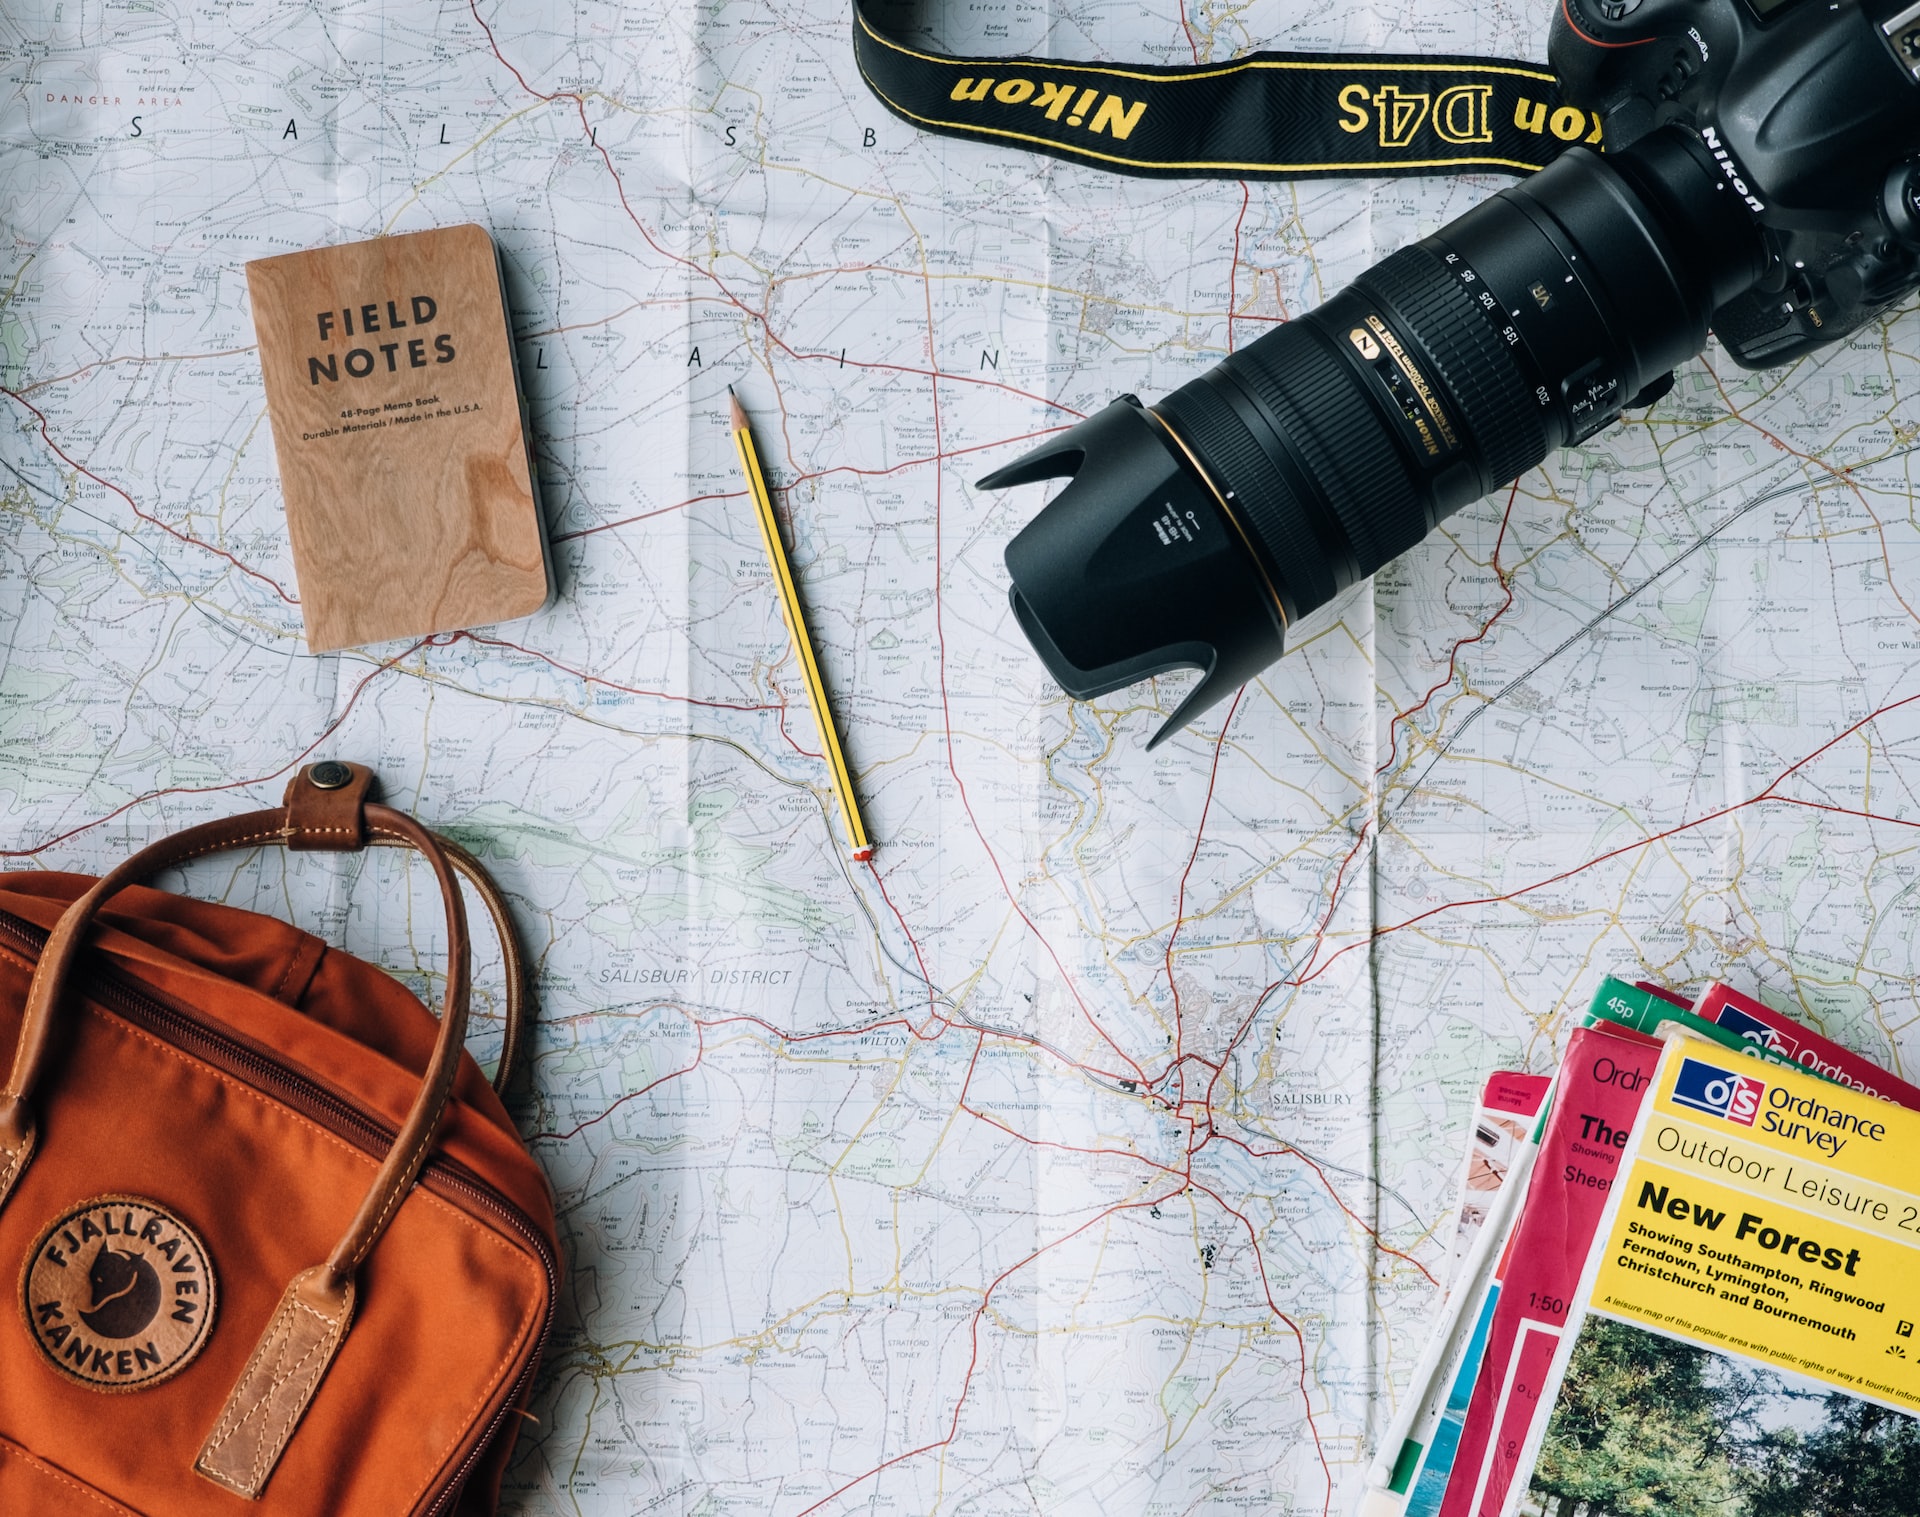 Maps and a camera serve as travel inspiration (photo: Annie Spratt)